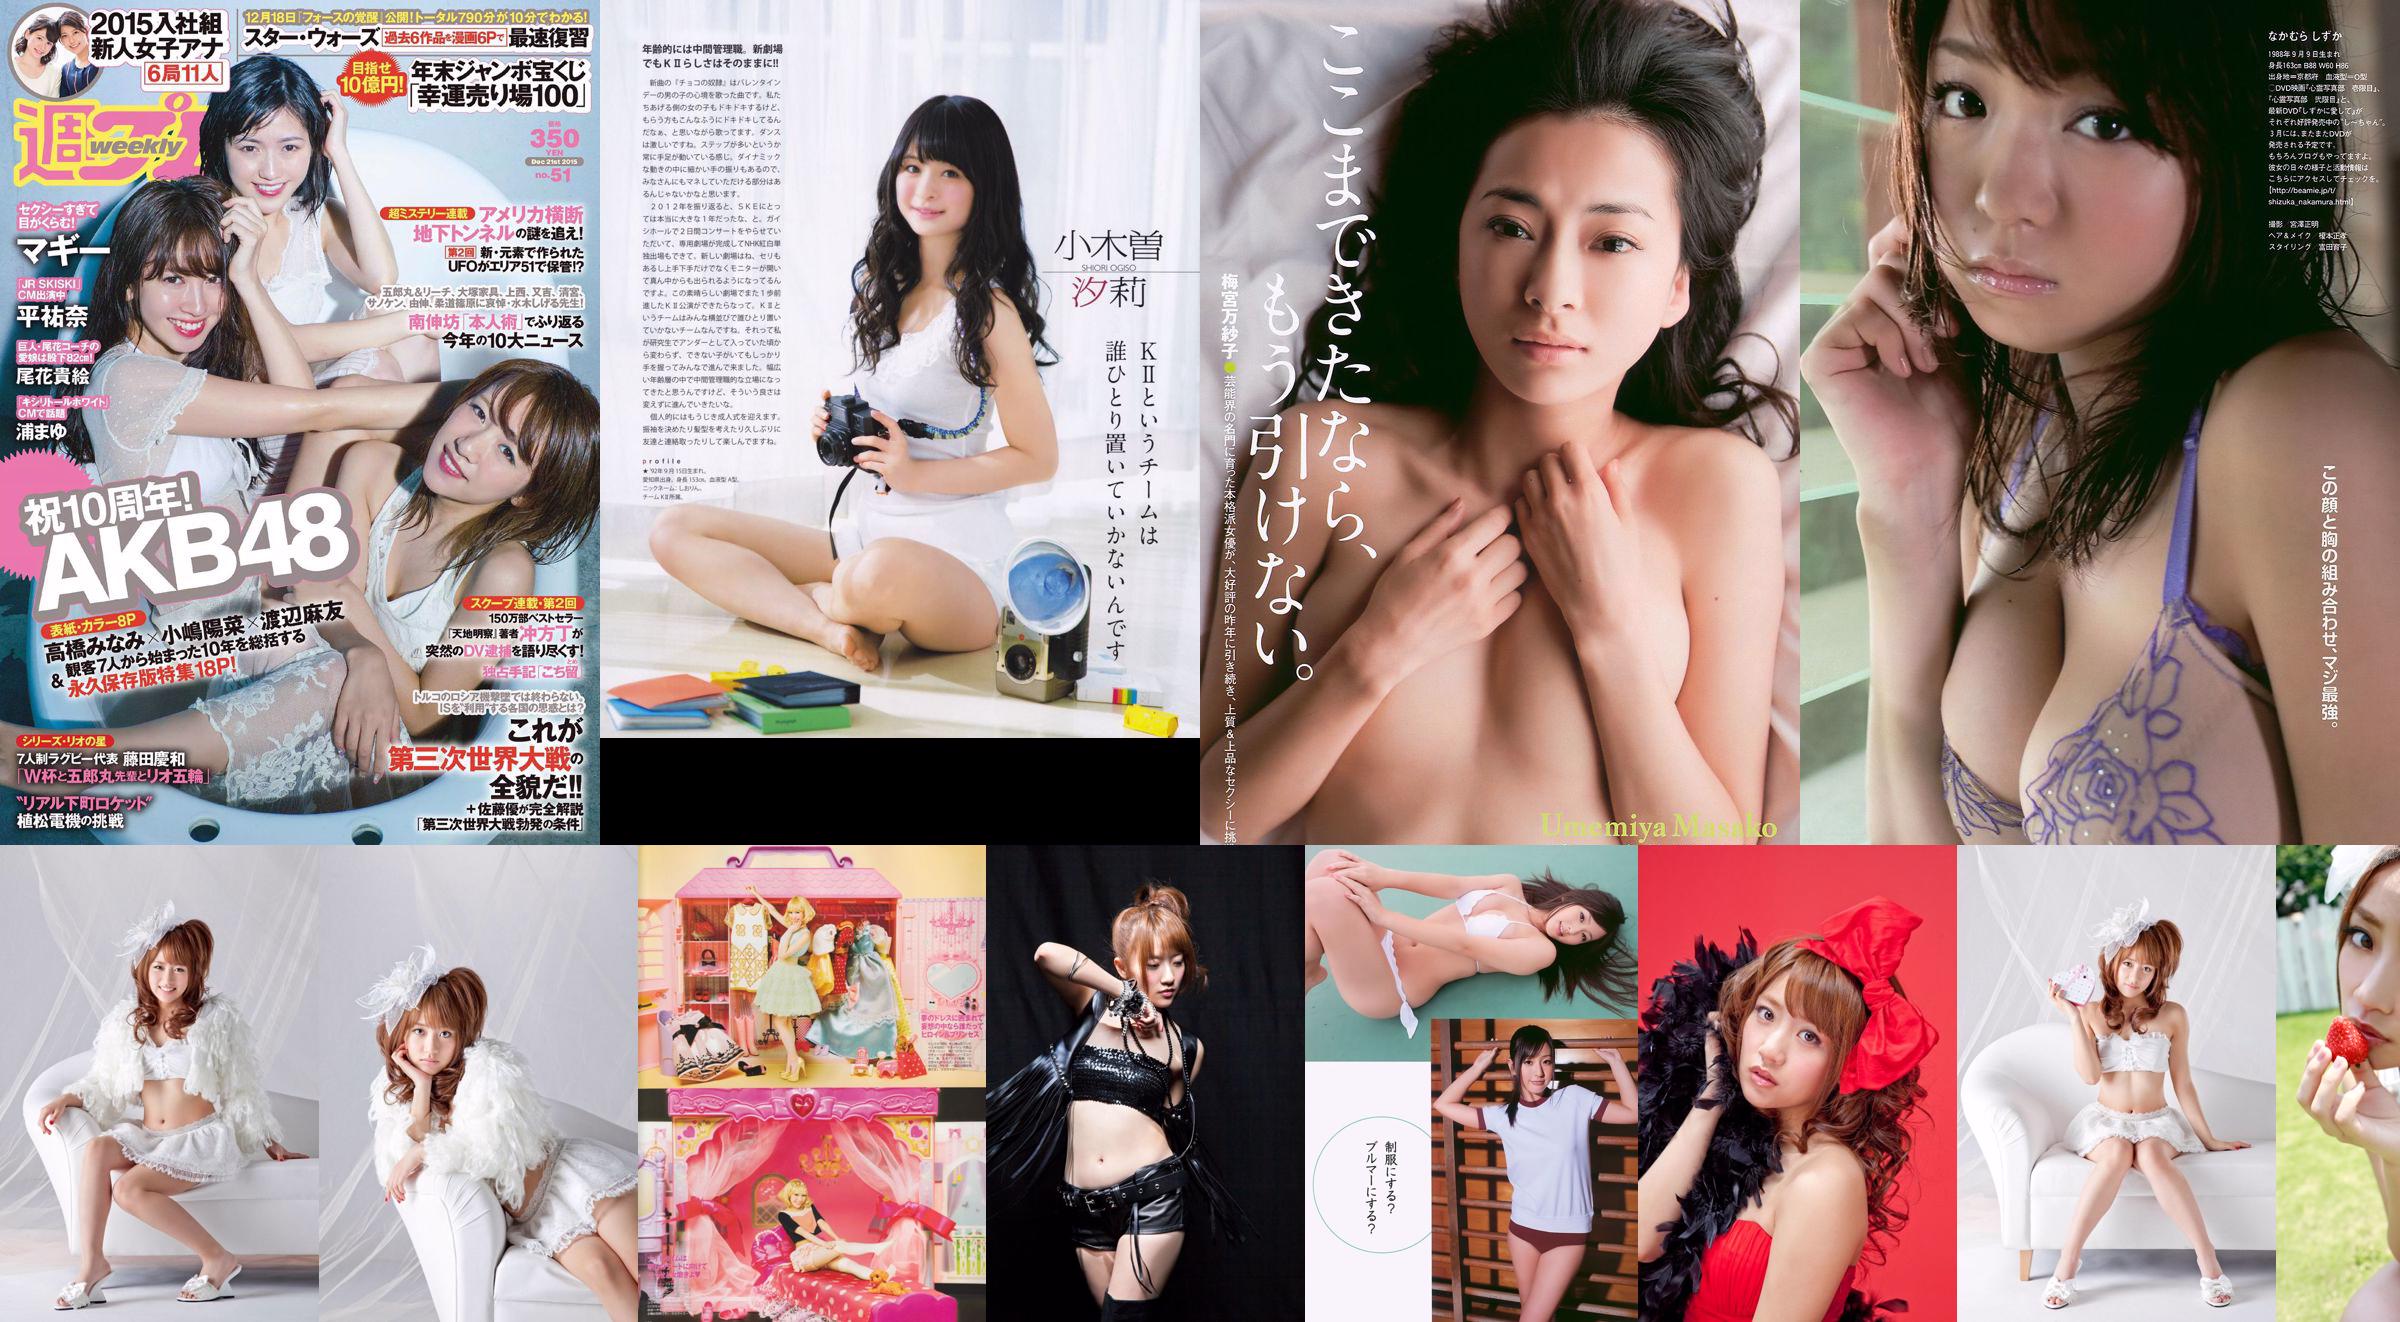 [Majalah Bom] 2013 Nomor 02 Takahashi Minami Matsui Jurina Kasai Tomomi Majalah Foto Kitahara Riehi No.69518c Halaman 1